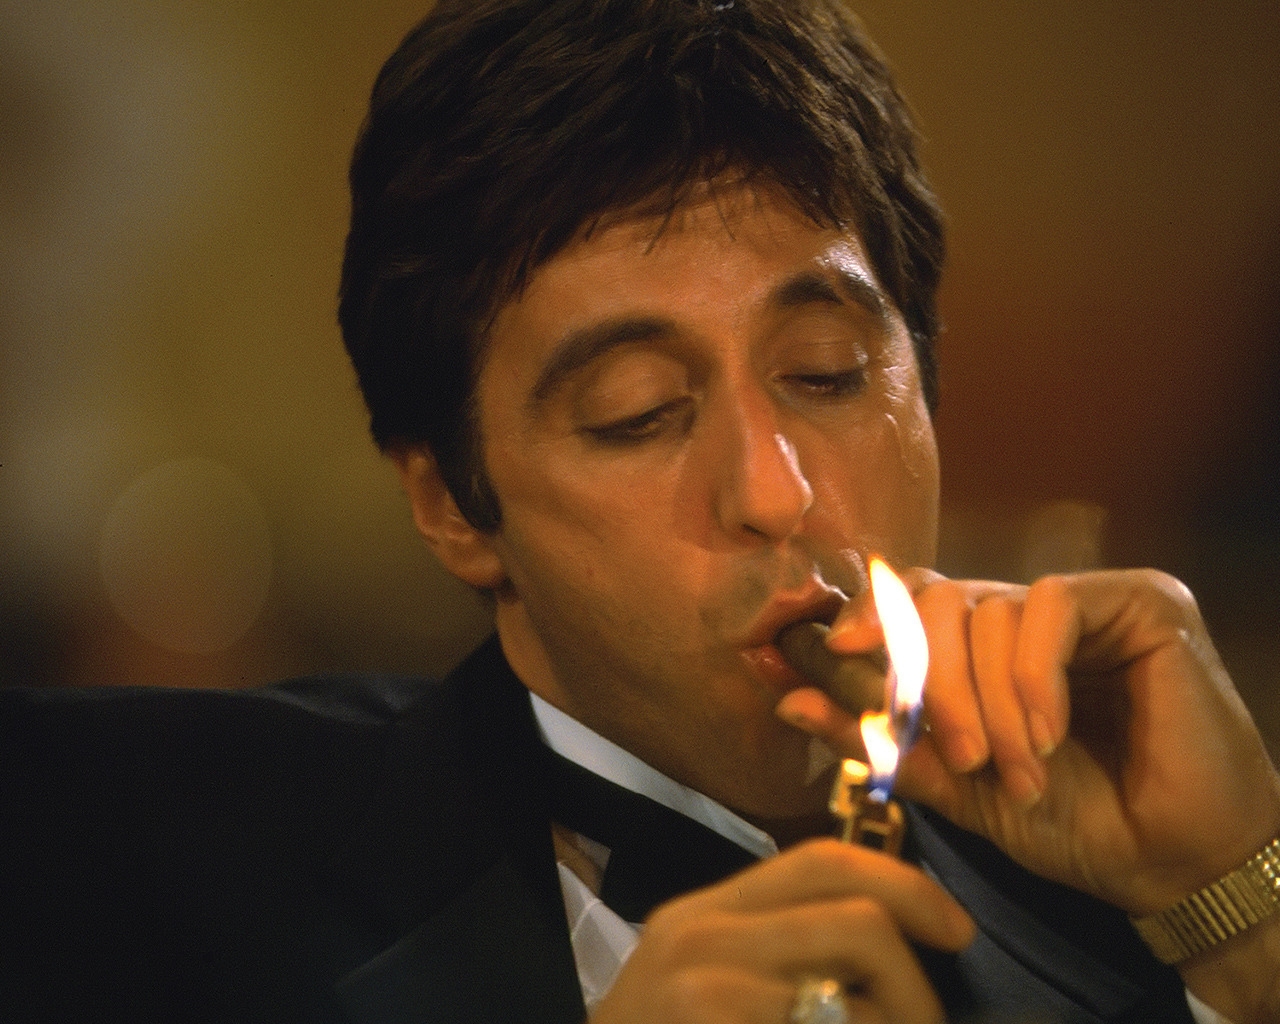 Tony Montana Smoking for 1280 x 1024 resolution